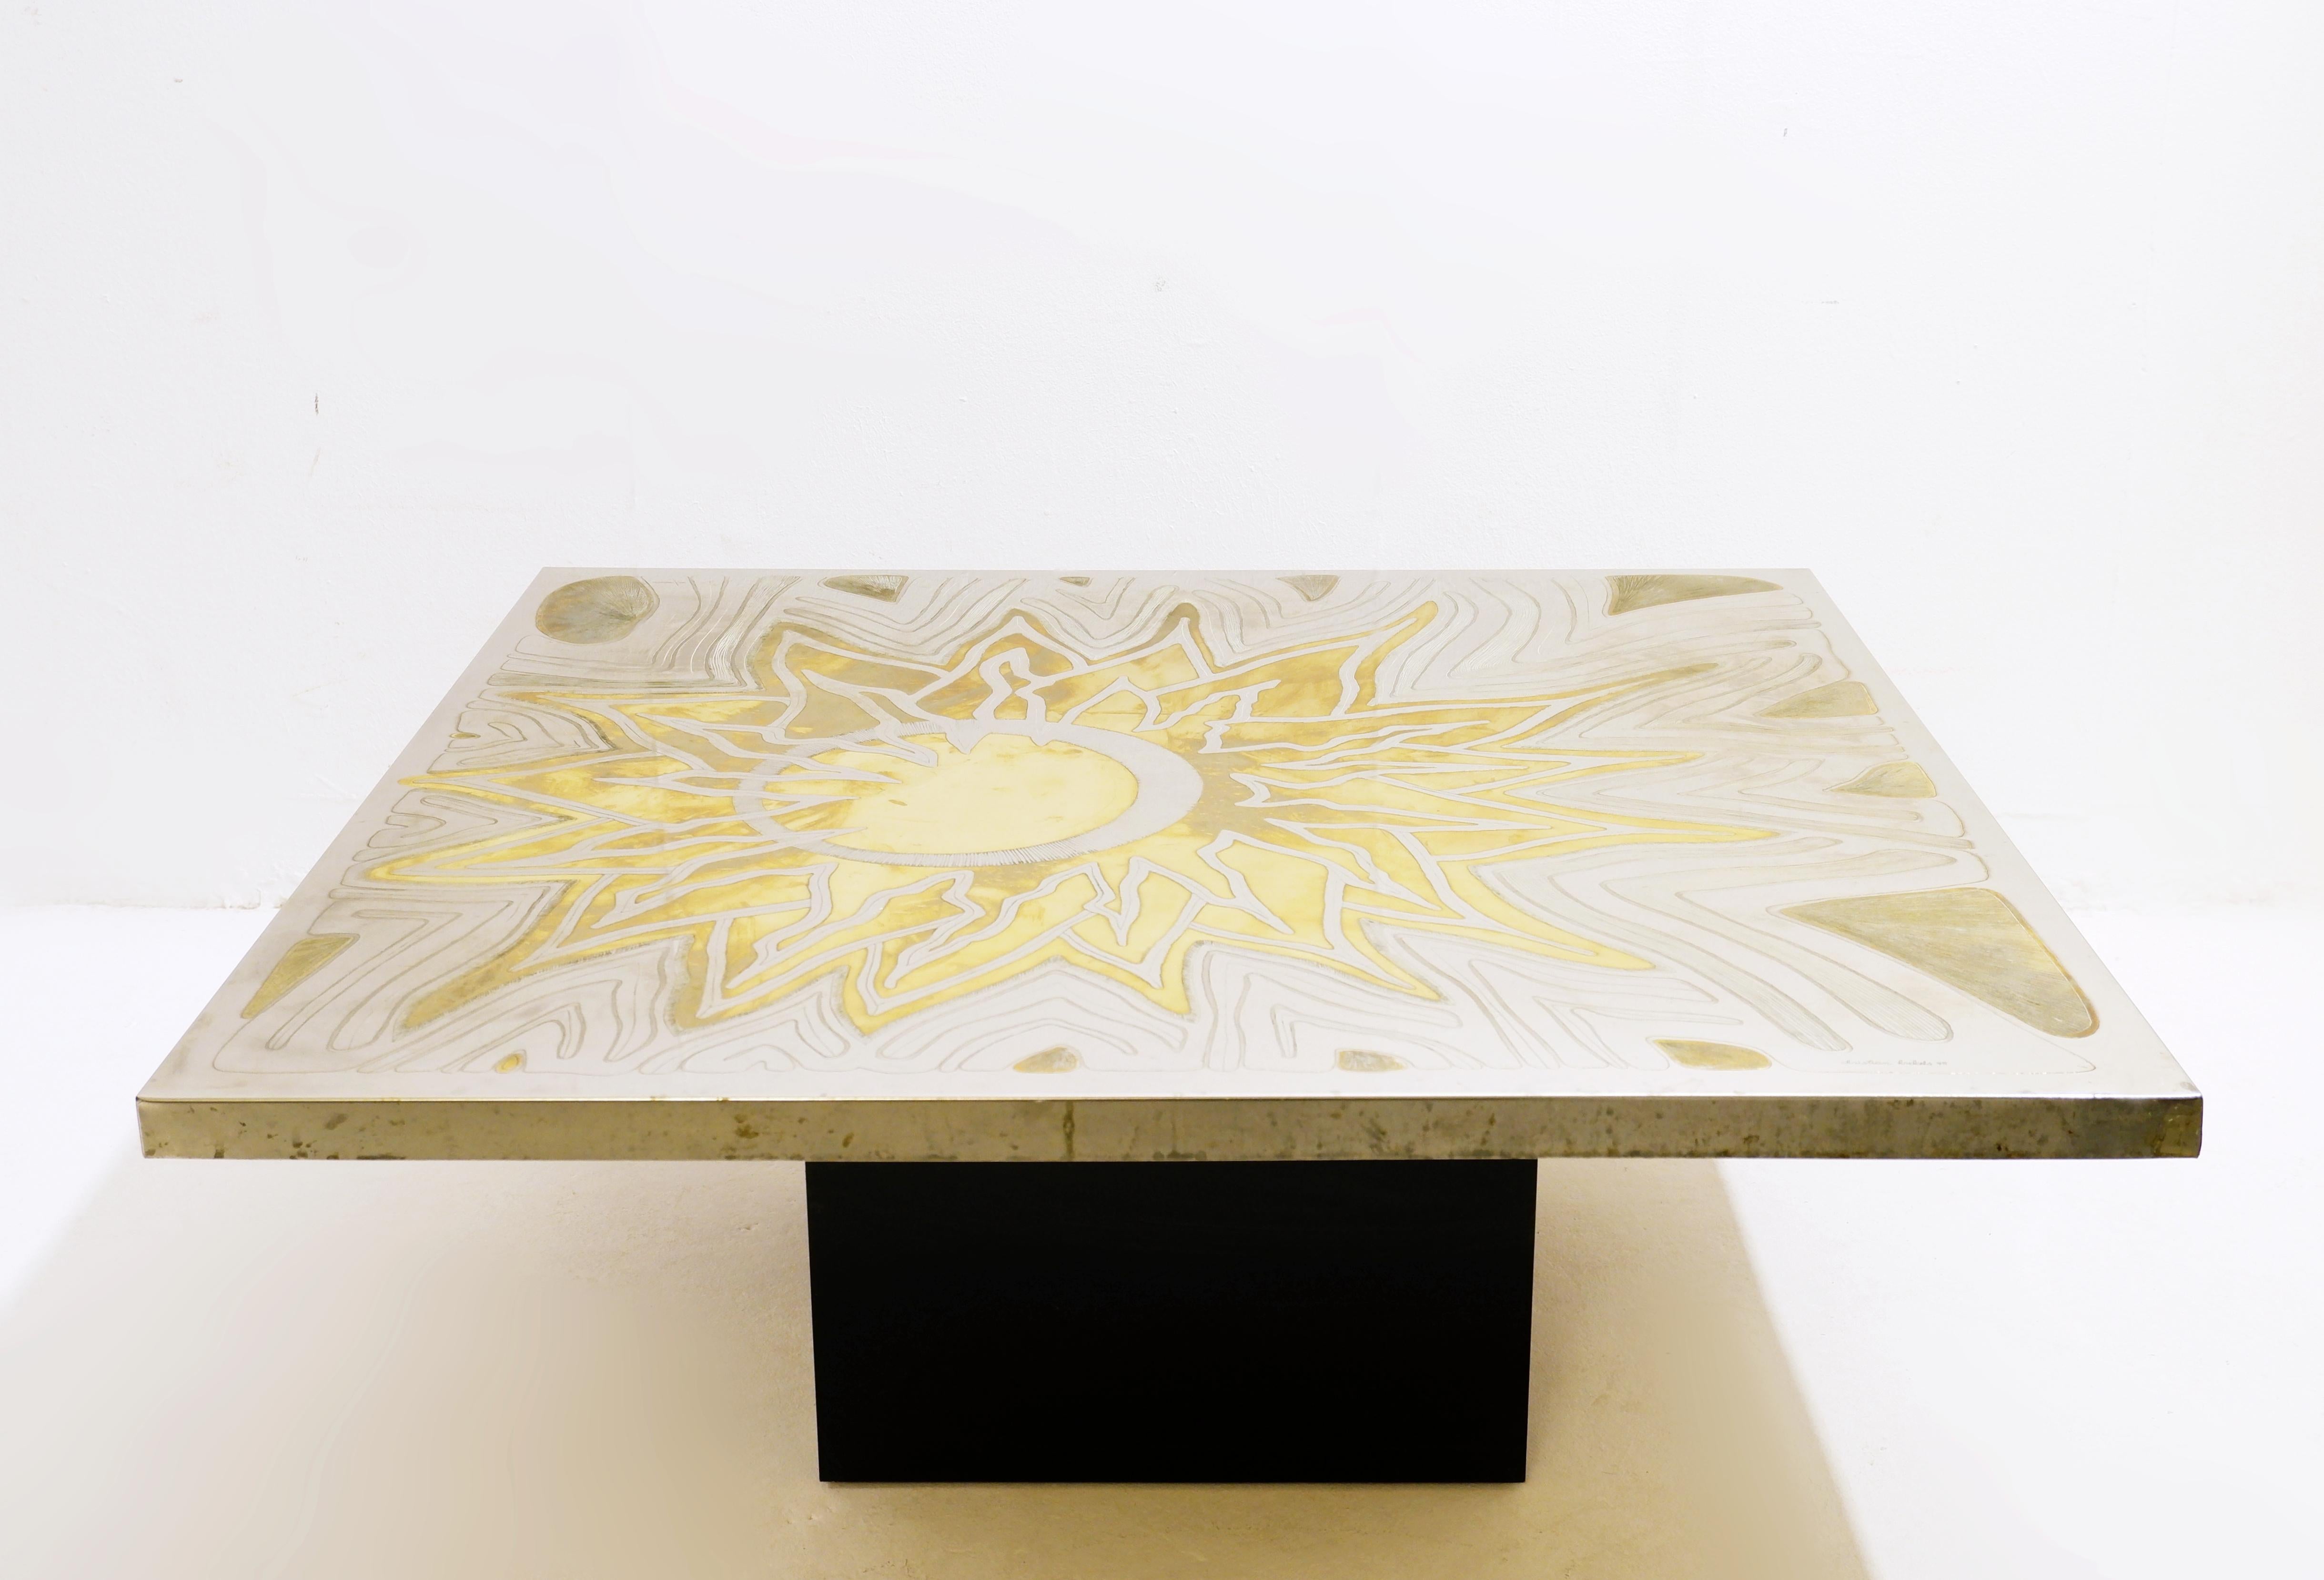 Mid-Century Modern coffee table by Christian Krekels - 1970s.